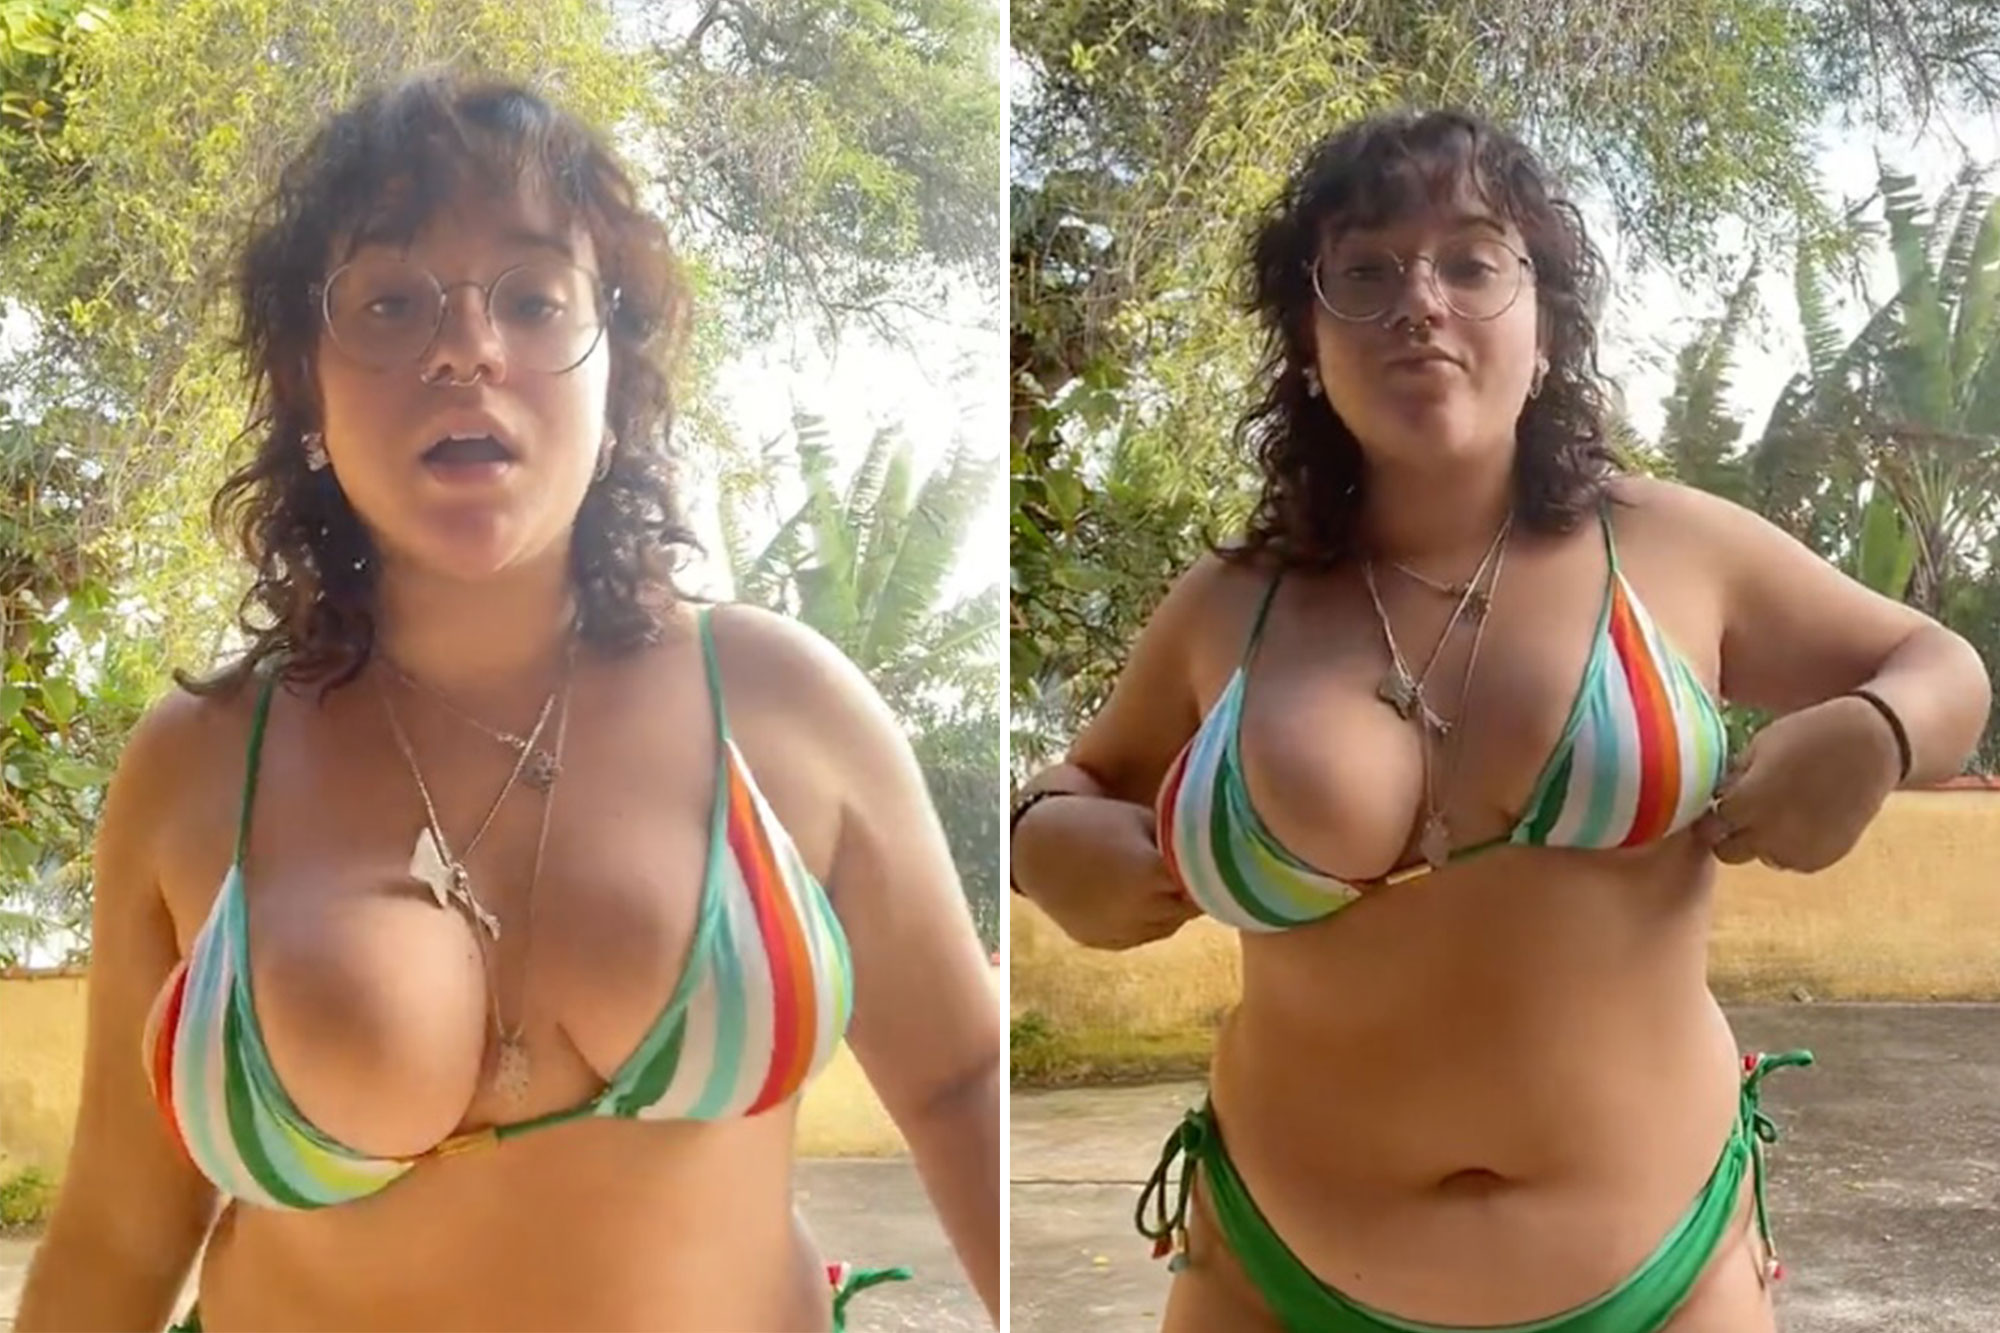 dodi pribadi recommends showing off big boobs pic